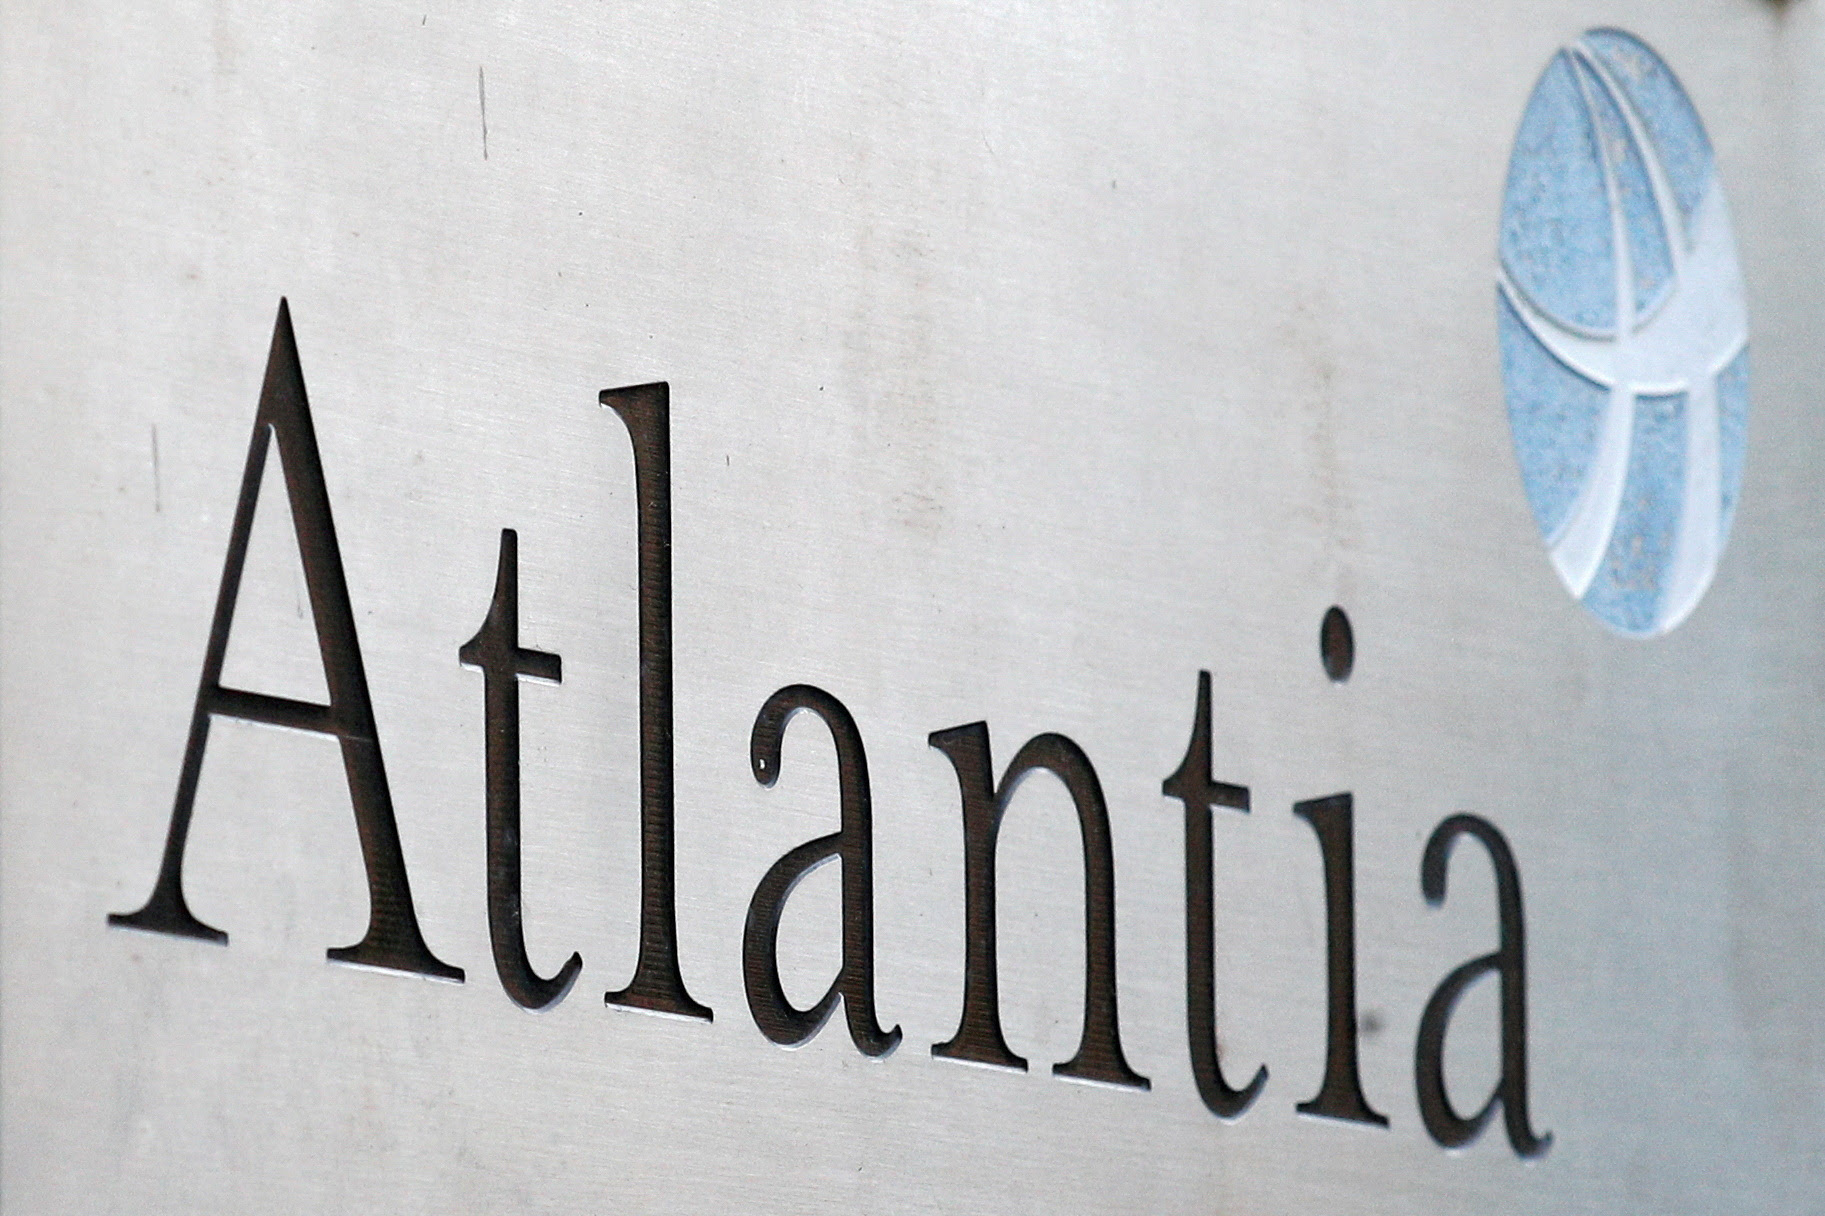 Atlantia exit highlights Milan's battle to retain market heavyweights